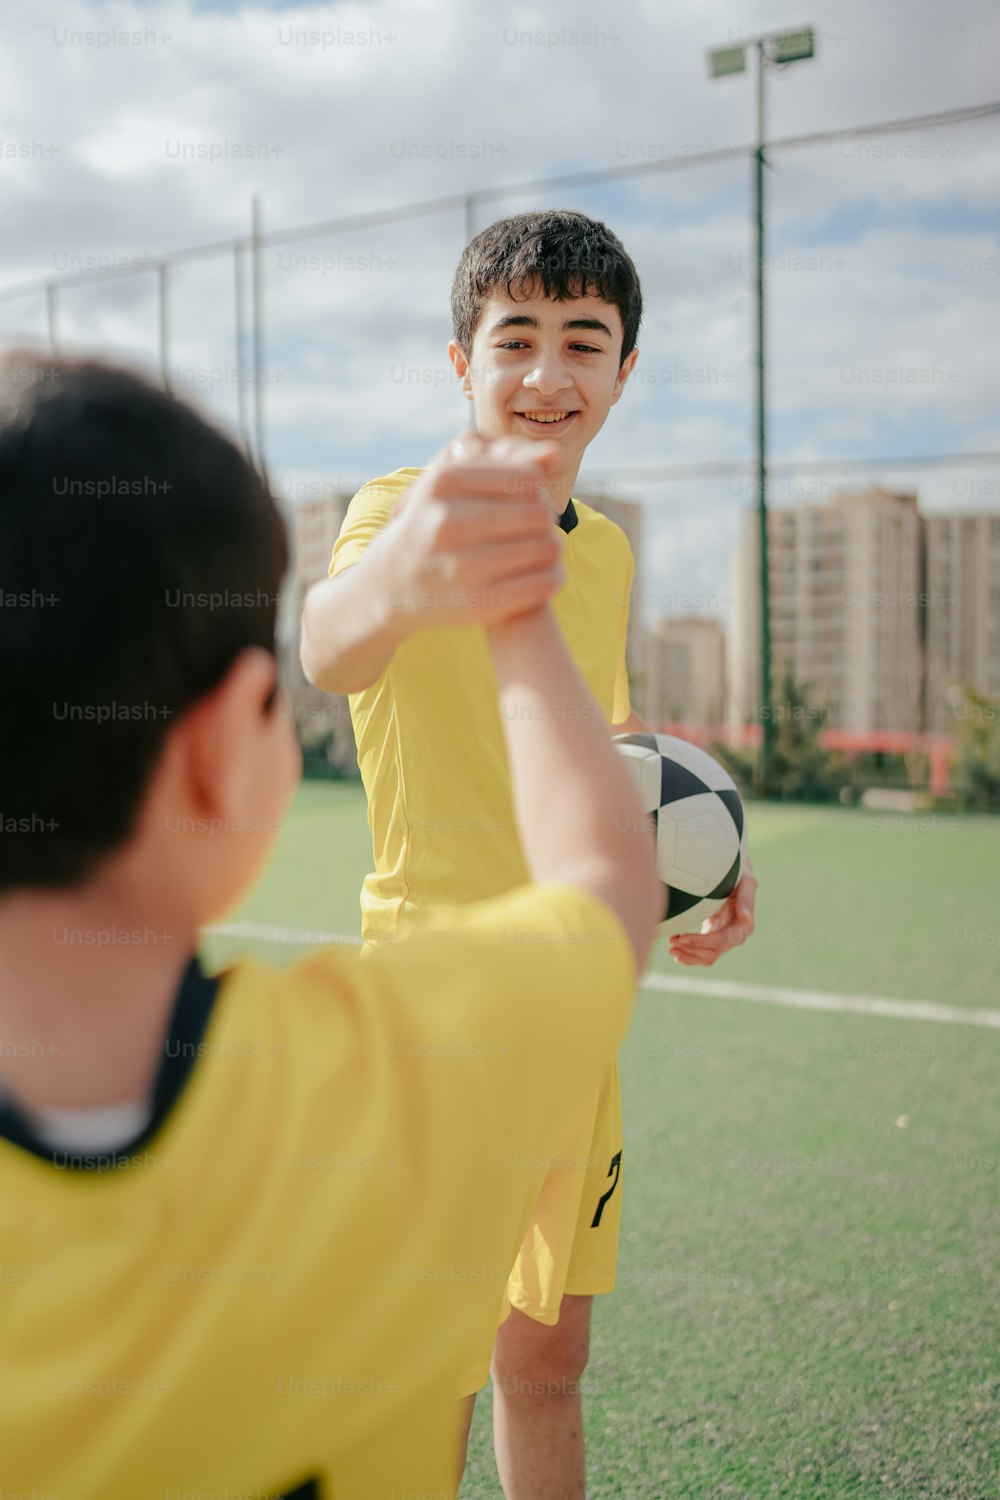 a boy in a yellow shirt holding a soccer ball